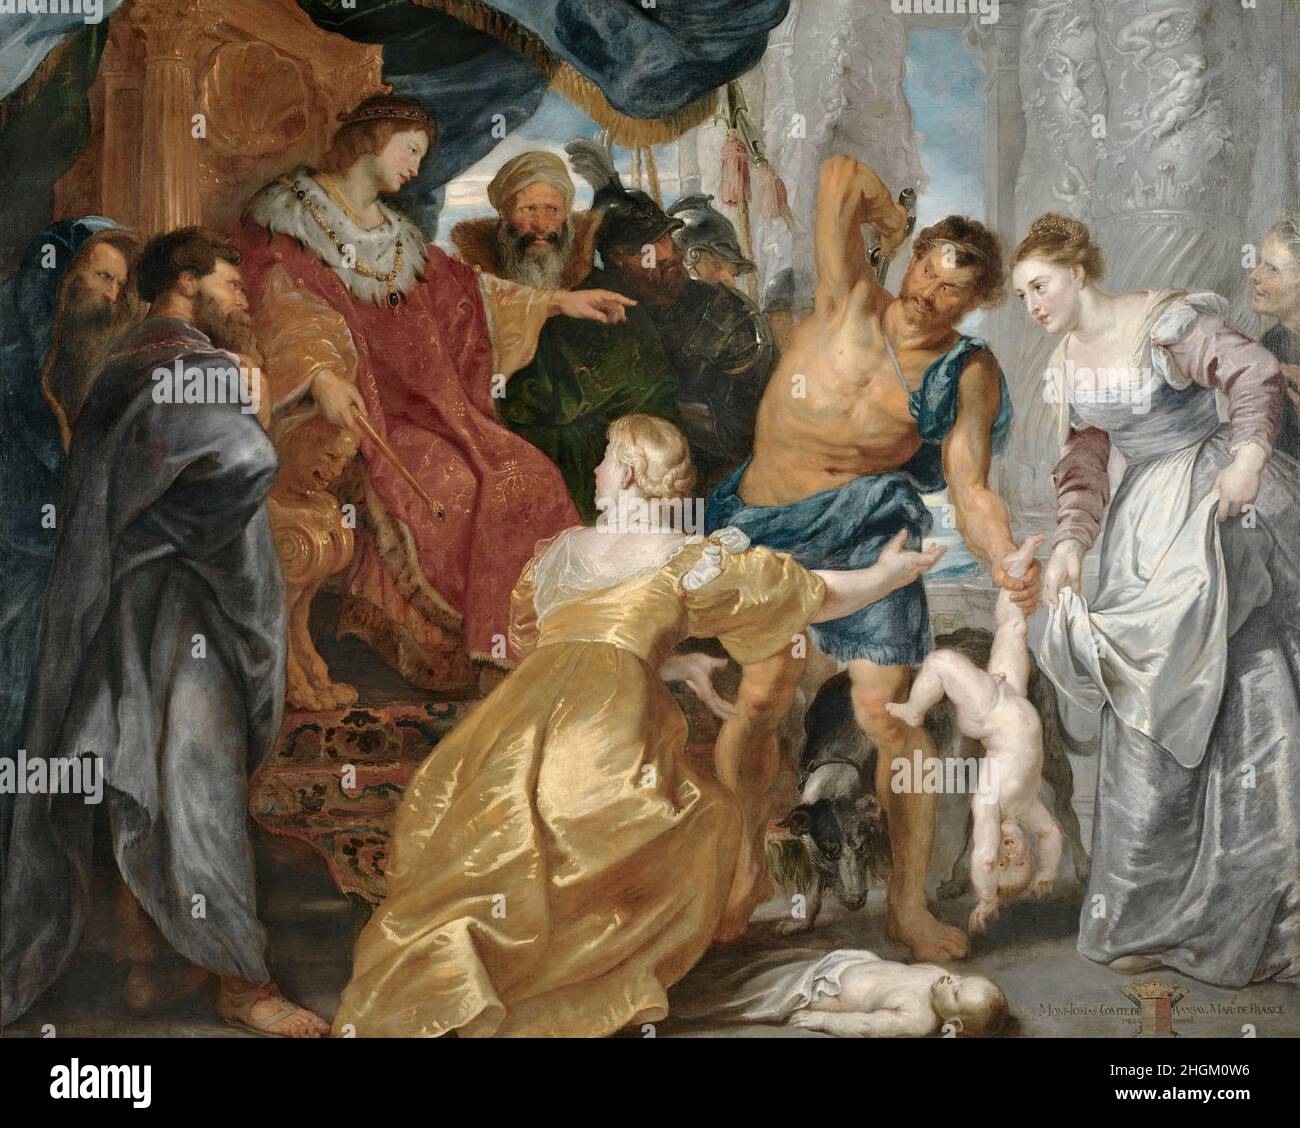 The Judgement of Solomon - 1617c. - Oil on canvas 234 x 303 cm - Rubens Pieter Paul Stock Photo